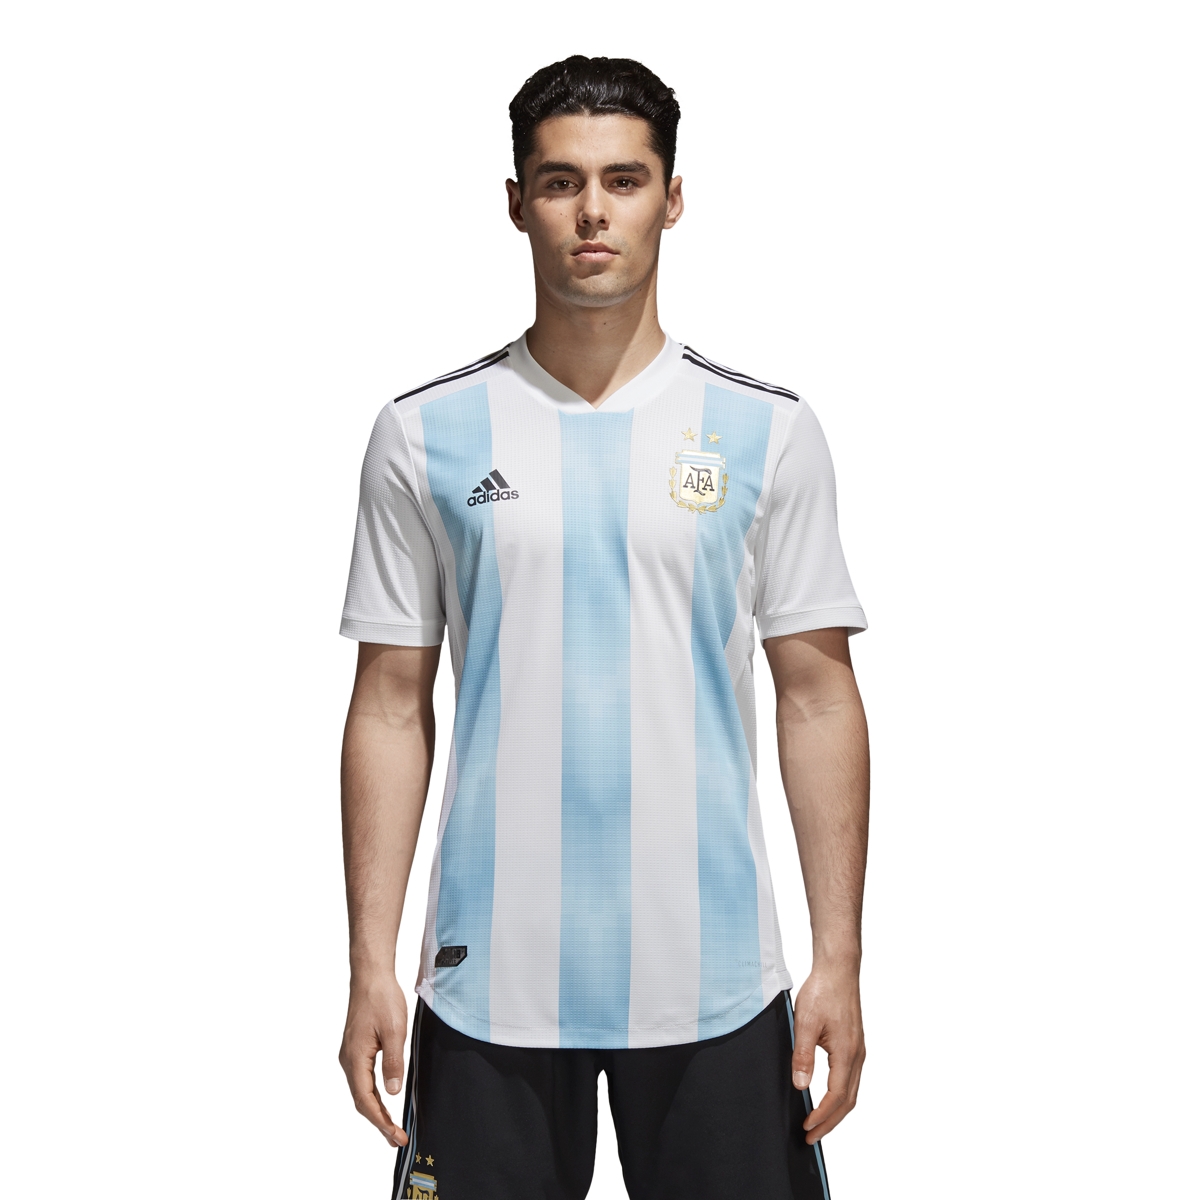 adidas argentina jersey 2018